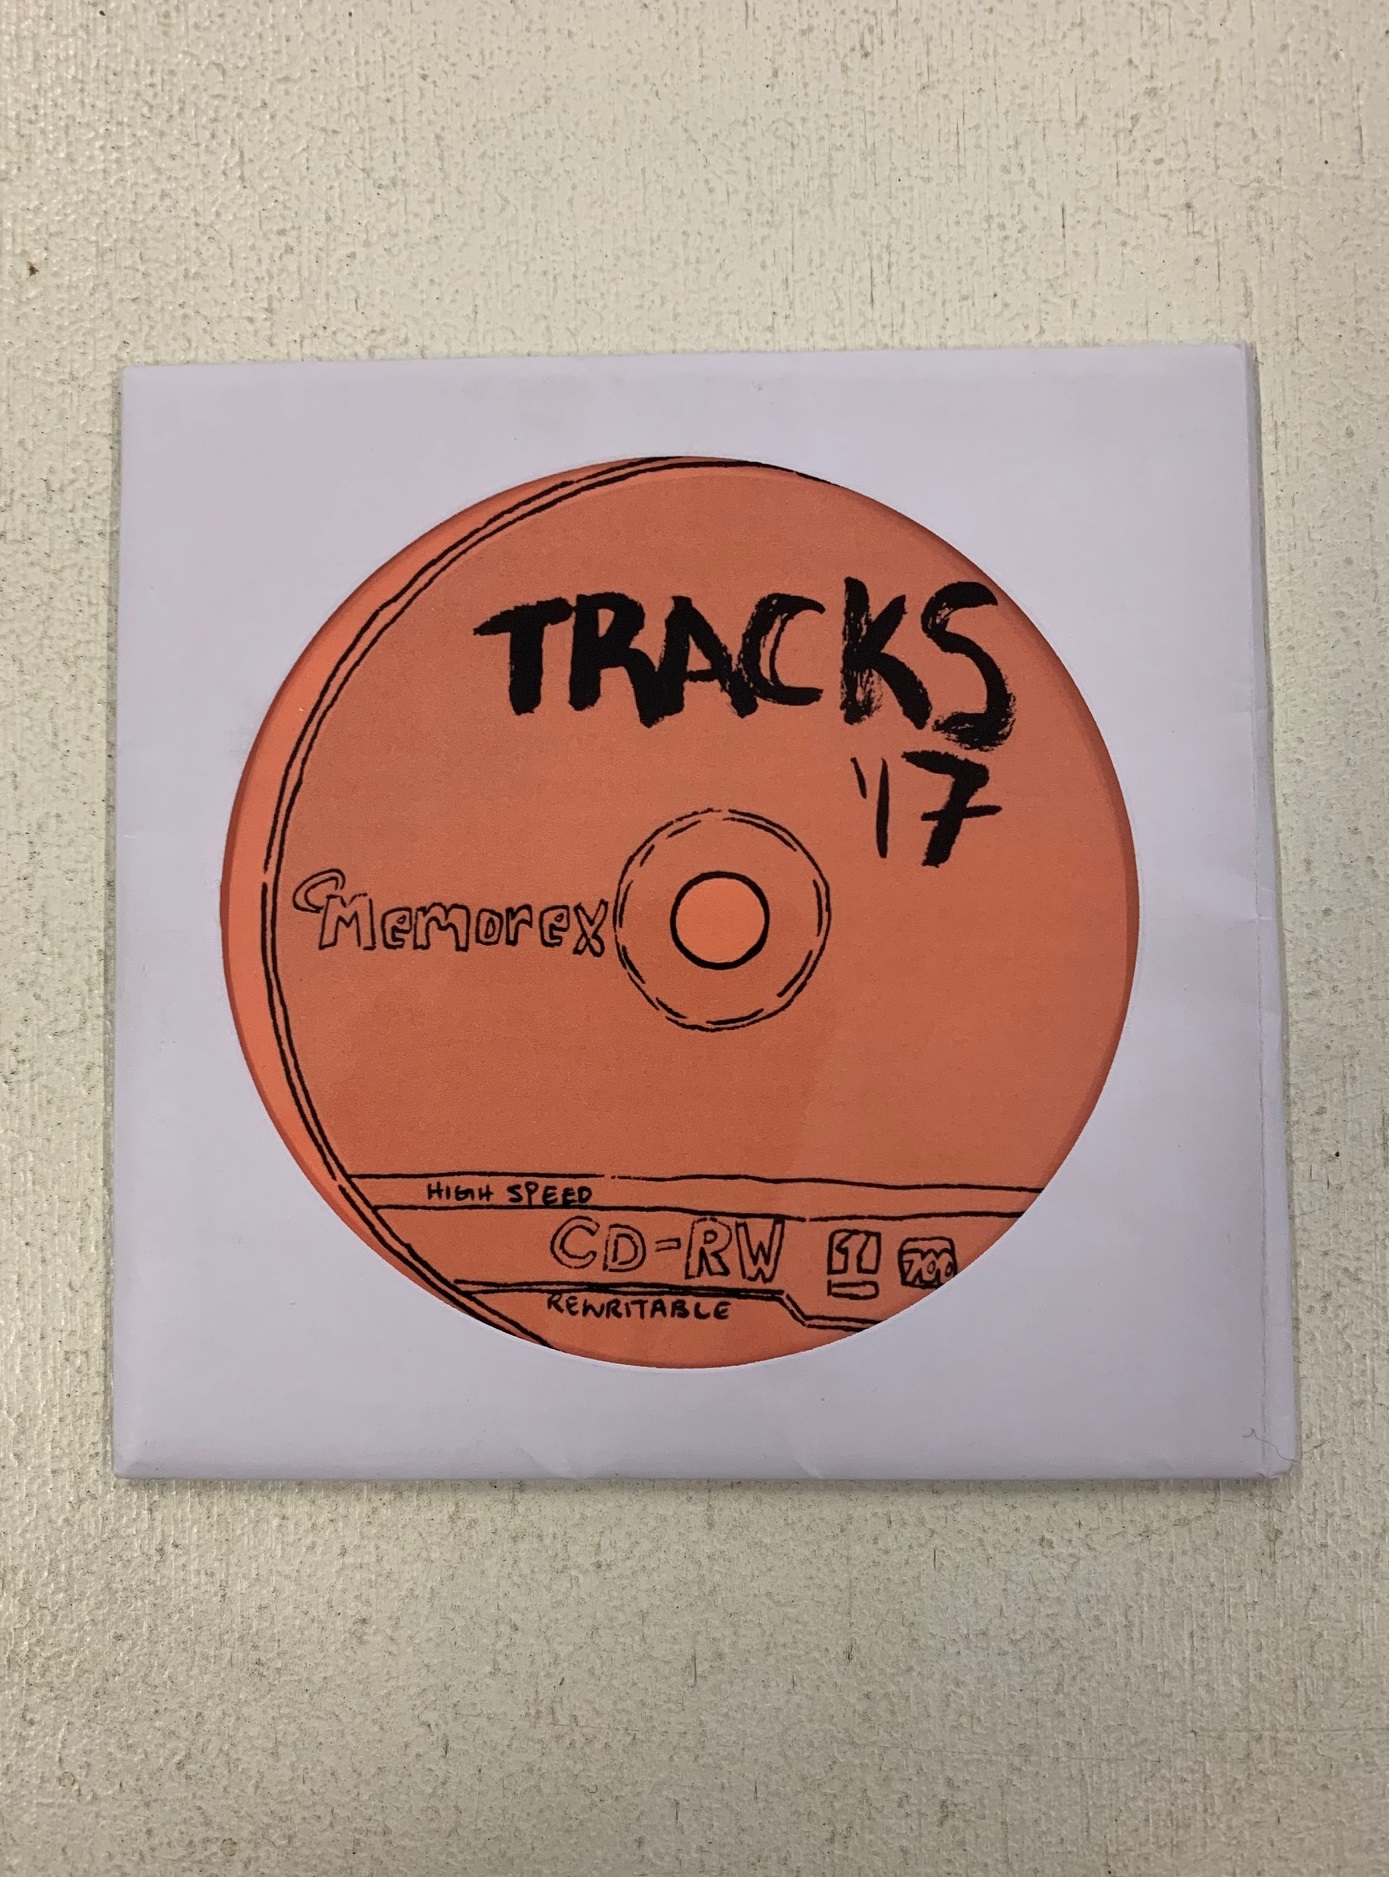 Tracks #17